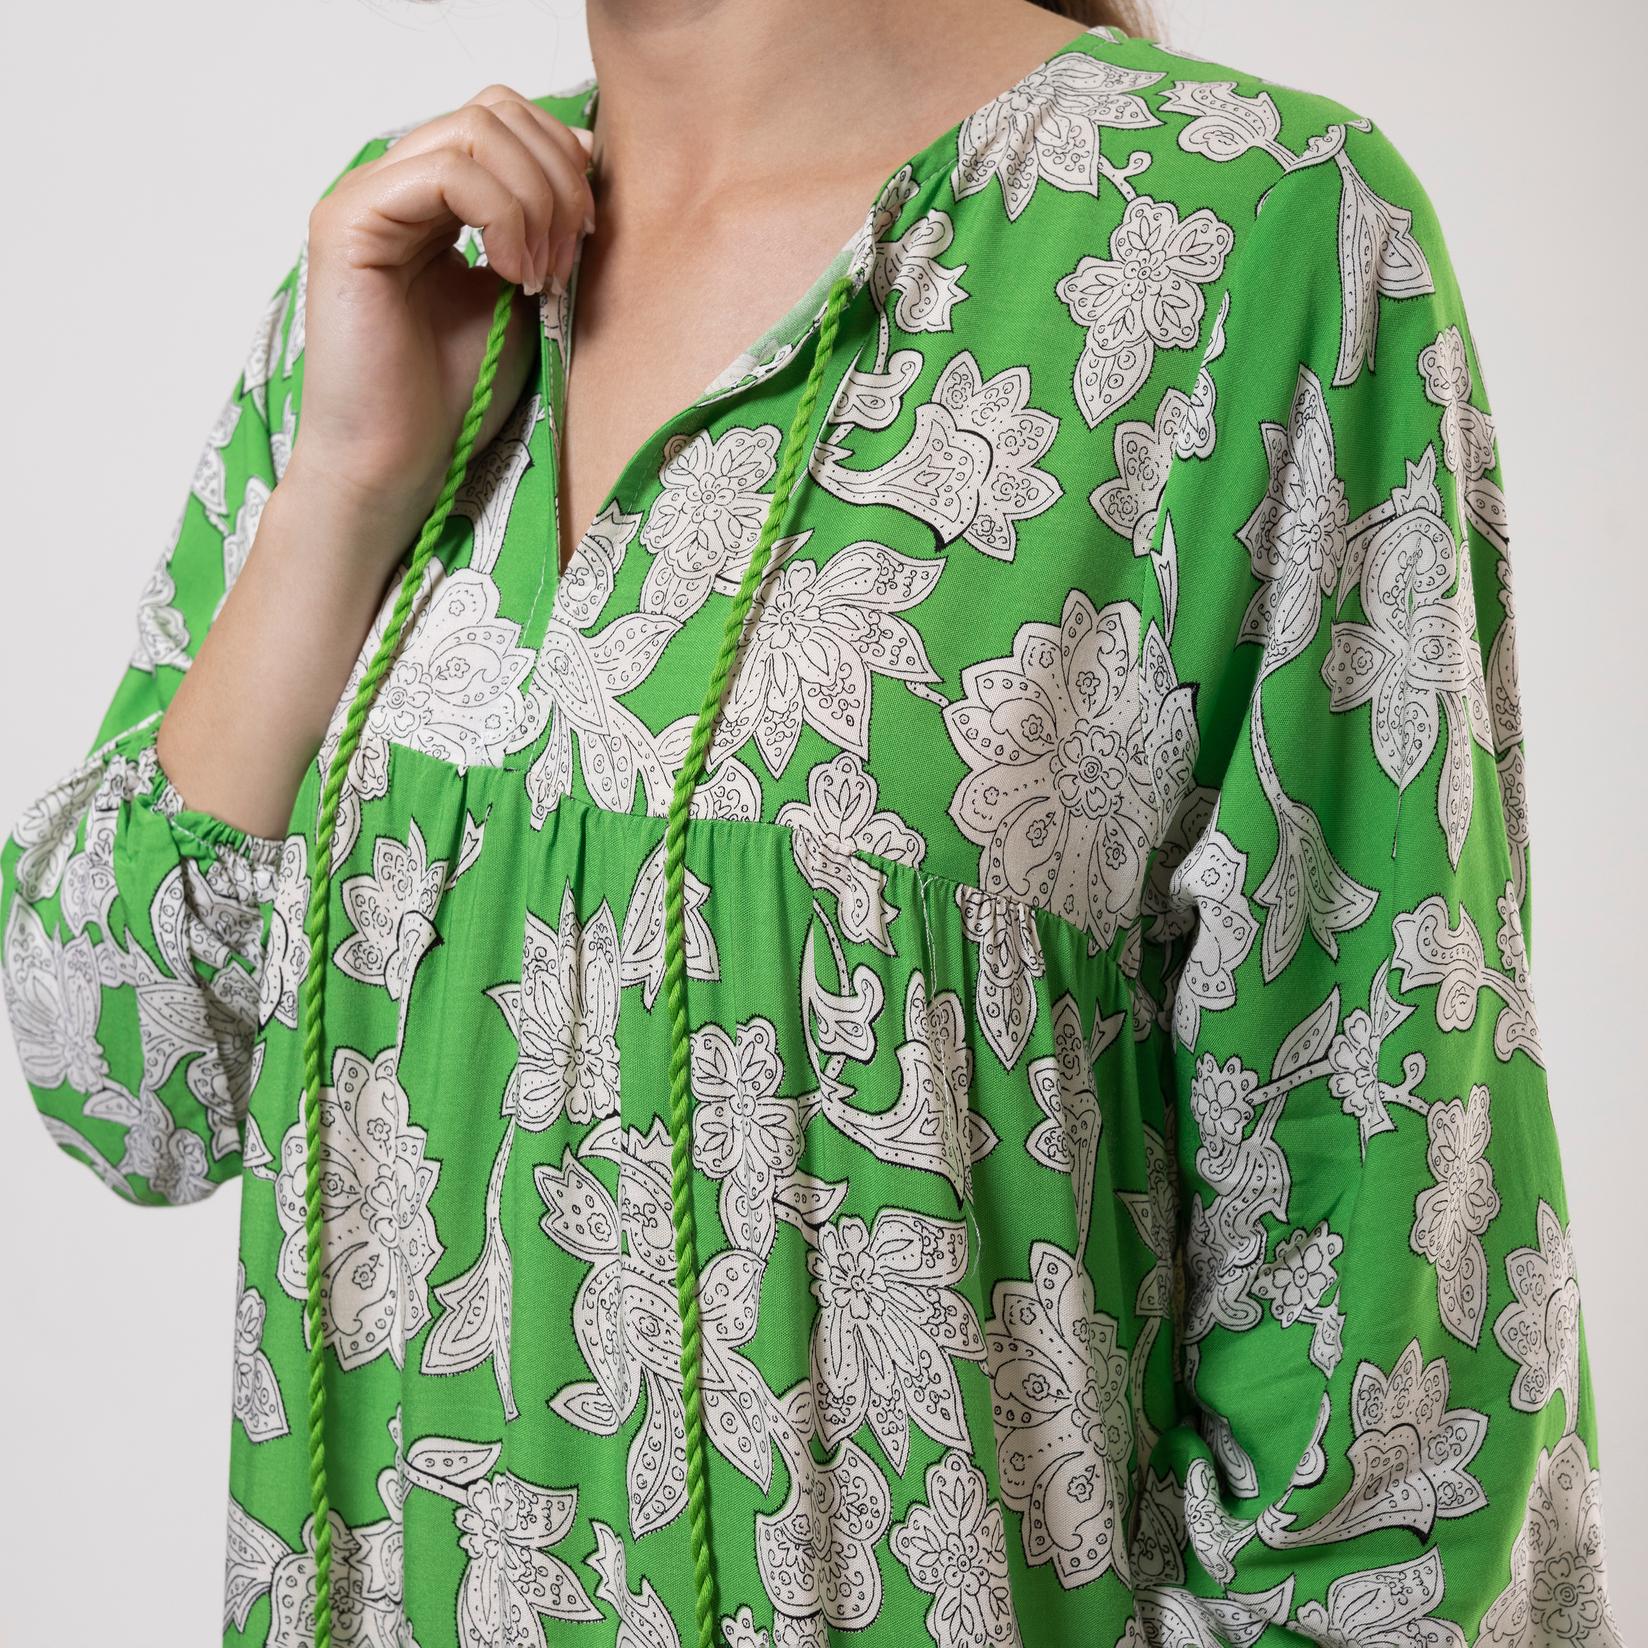 Selected image for FAME Ženska haljina sa cvetovima zelena